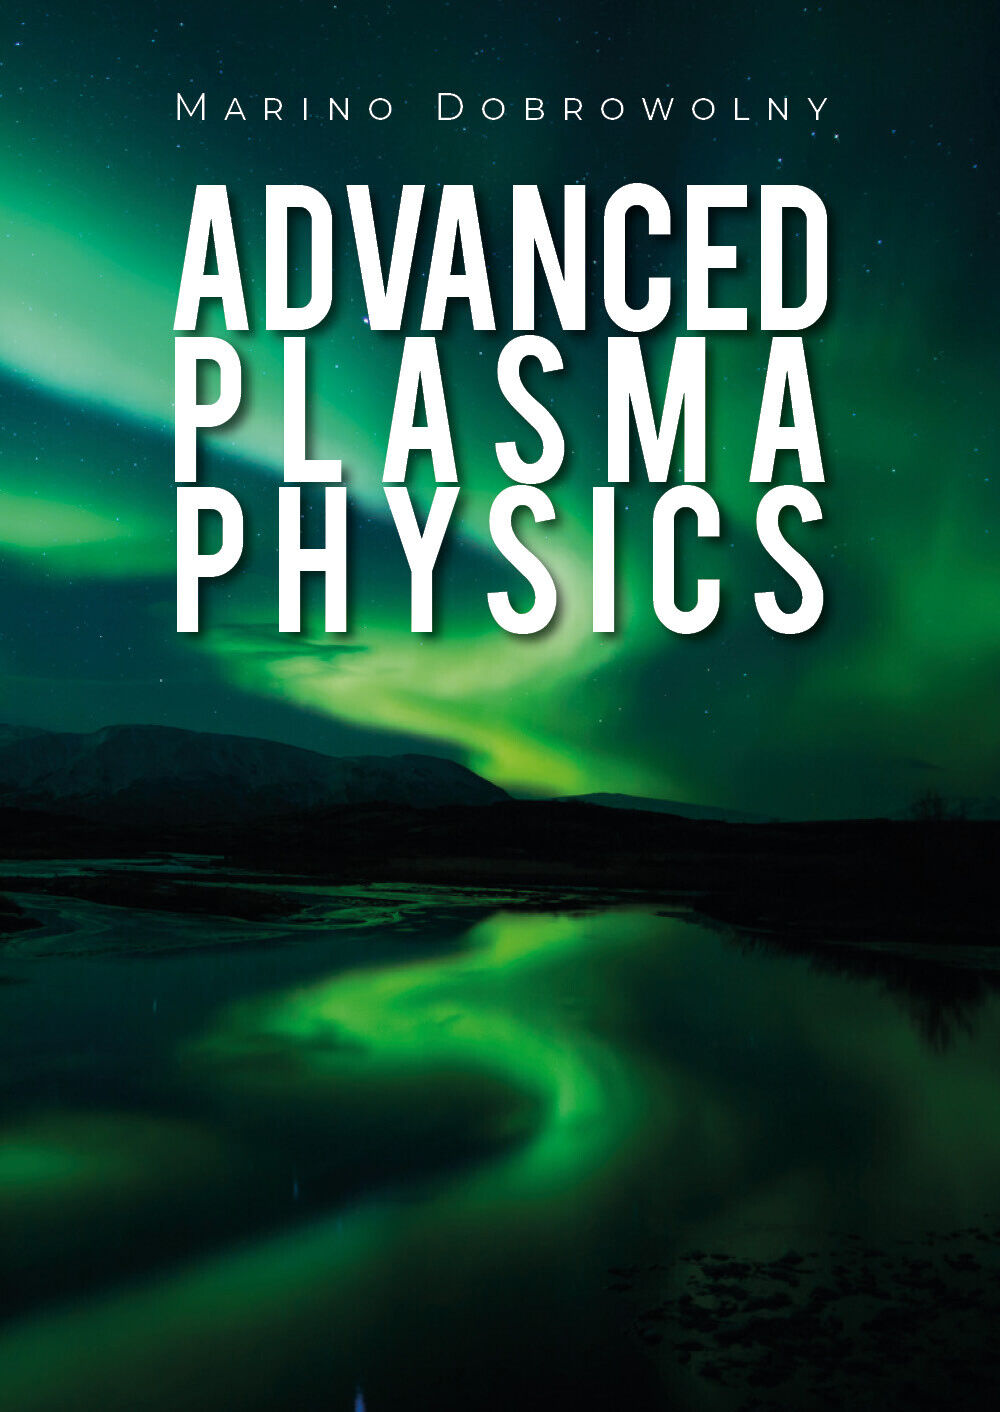 Advanced Plasma Physics -  Marino Dobrowolny,  2019,  Youcanprint